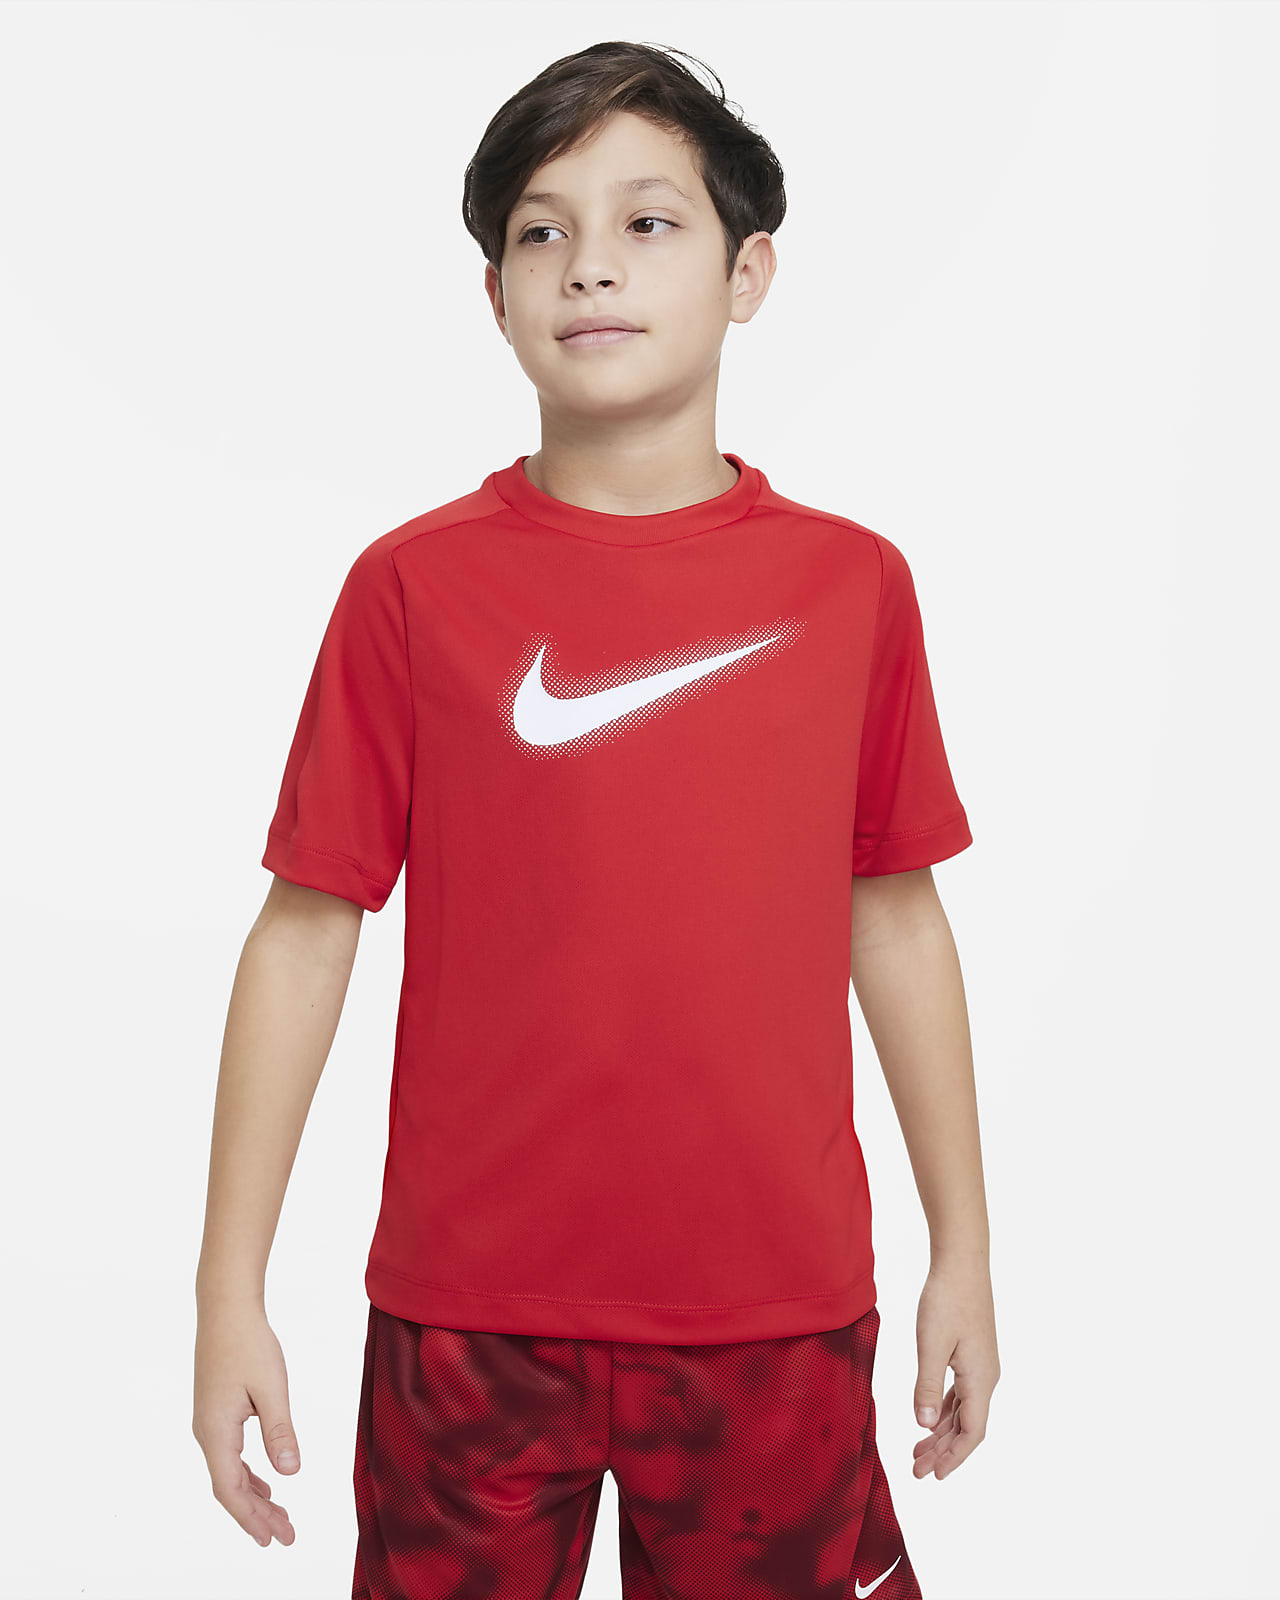 Nike Multi Dri-FIT trainingstop met graphic voor jongens